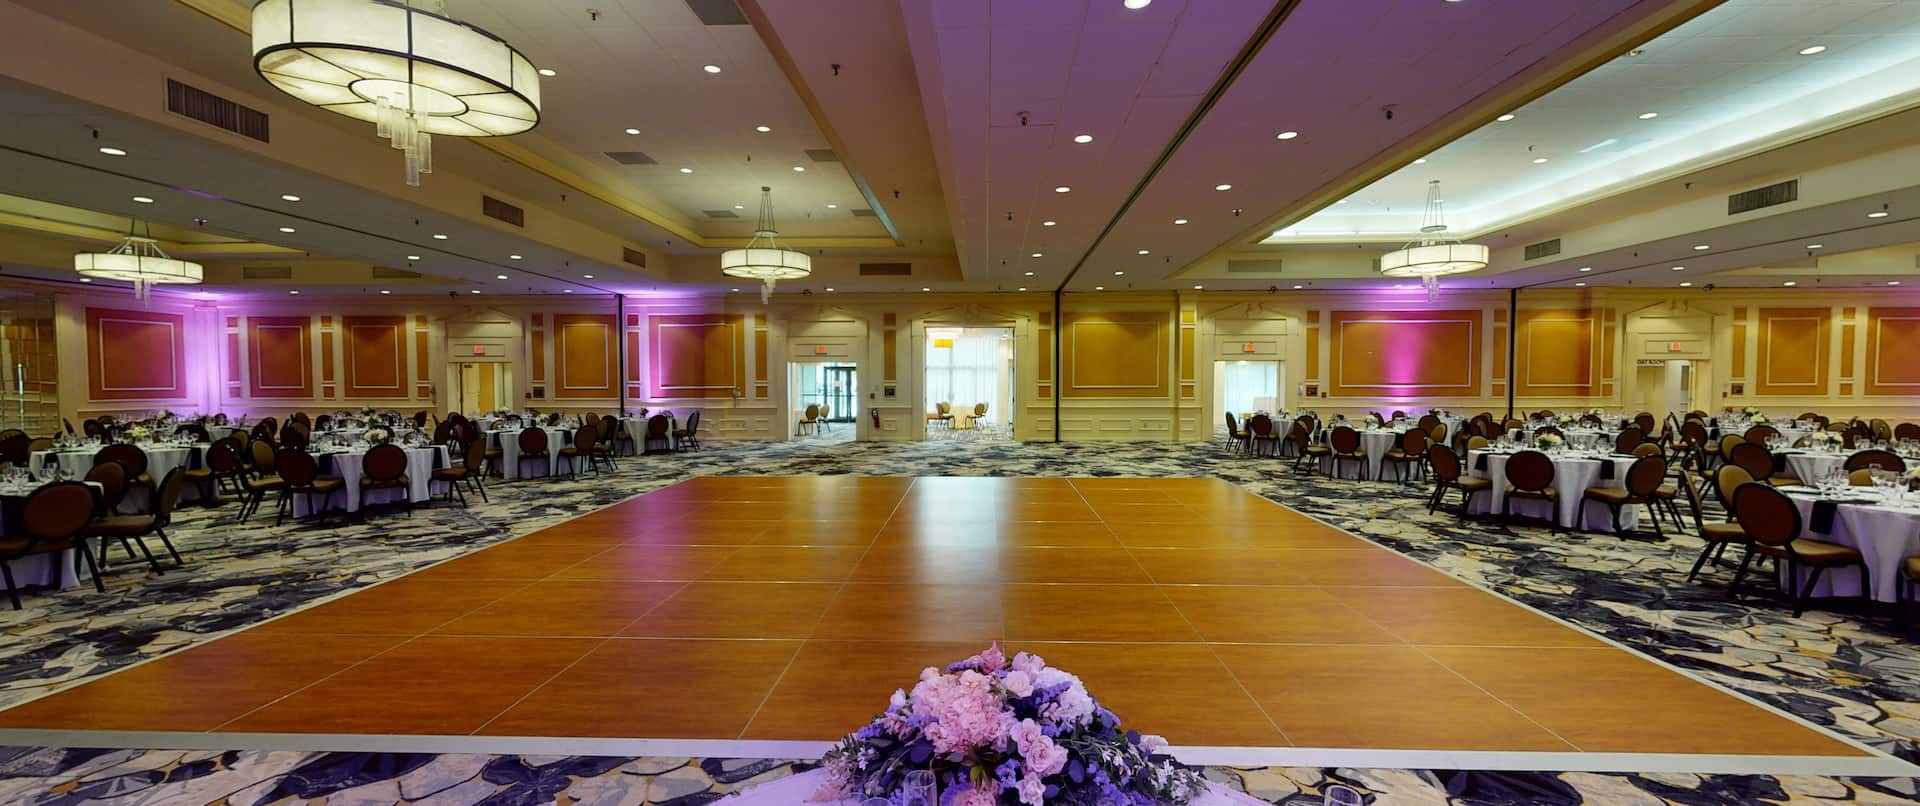 Grand Ballroom with dance floor